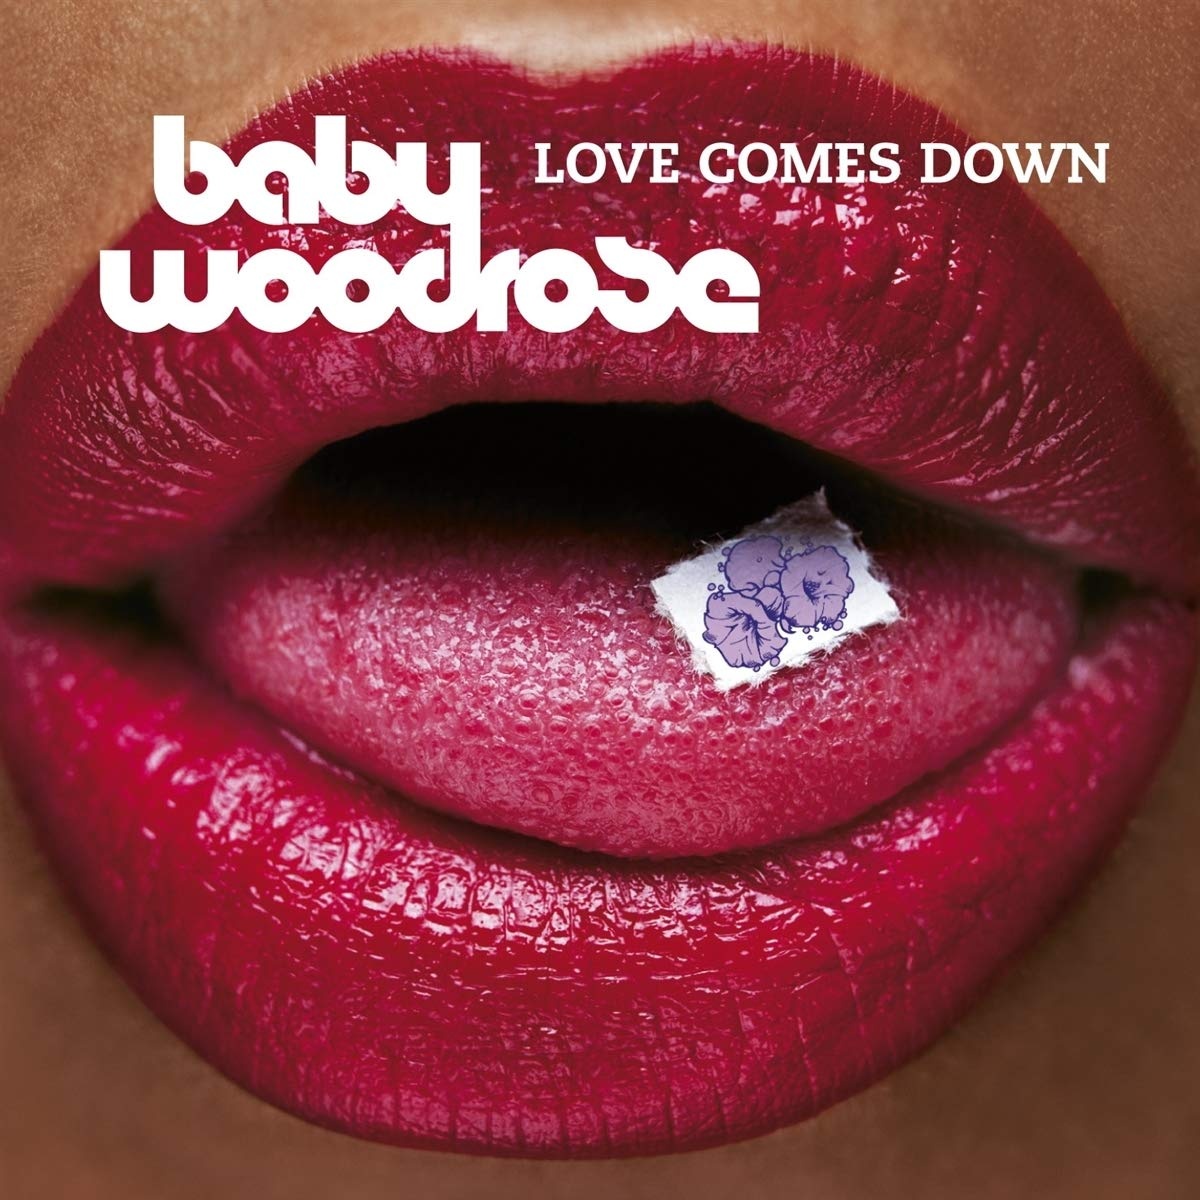 Baby Woodrose. Baby Woodrose album. Baby come down. Comes Love слушать.